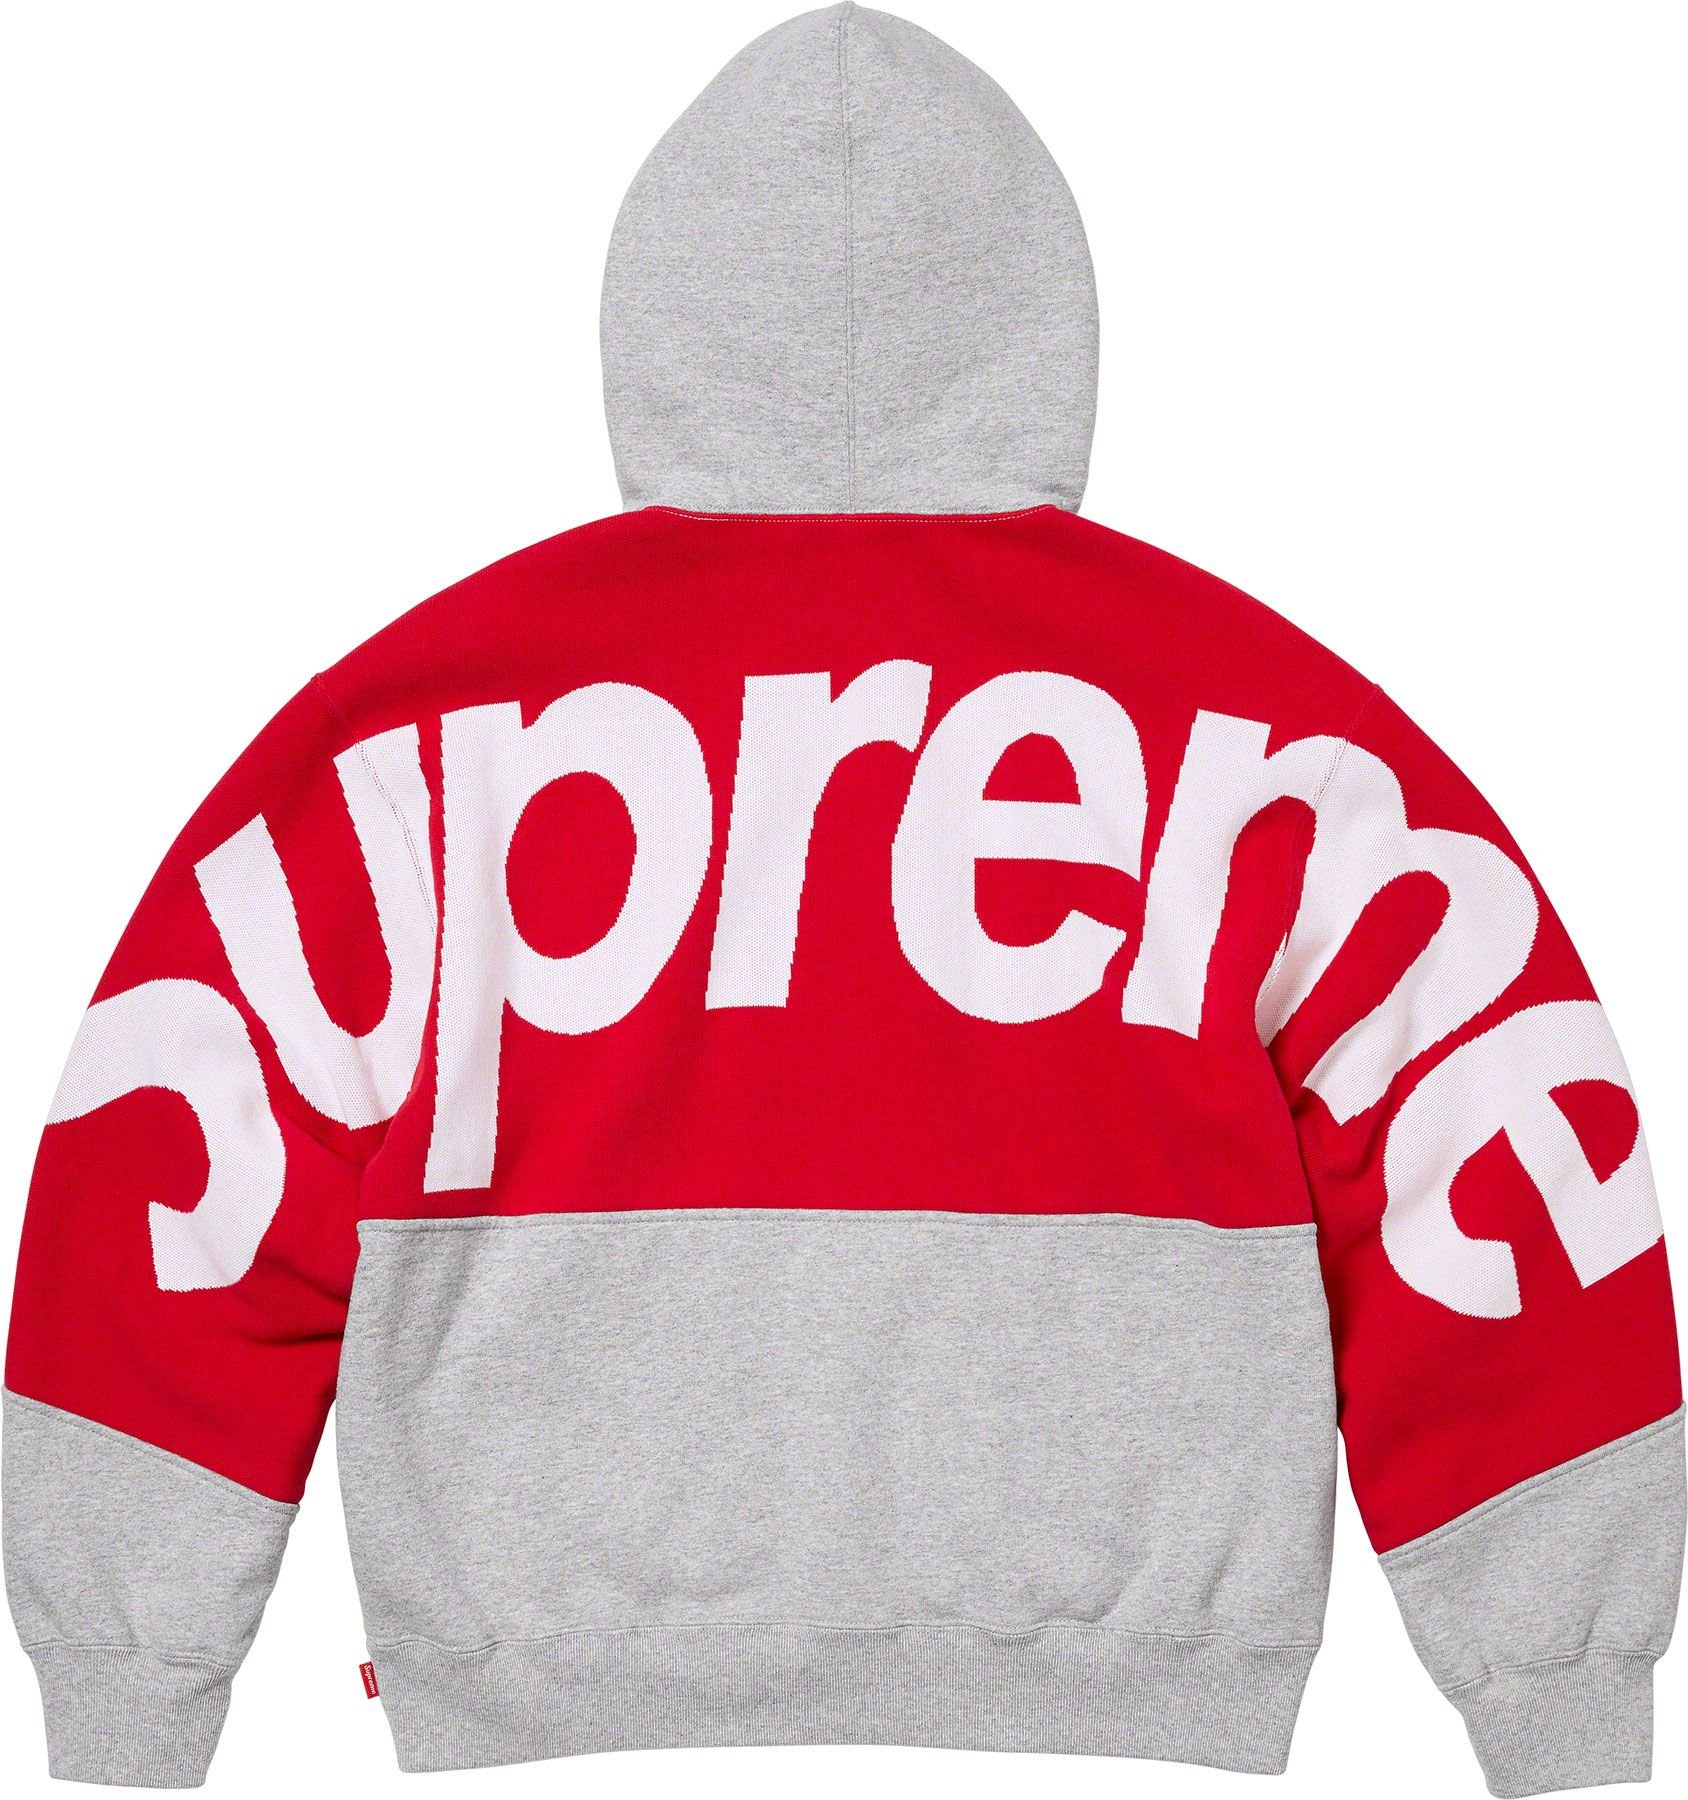 Box Logo Hooded Sweatshirt - fall winter 2023 - Supreme